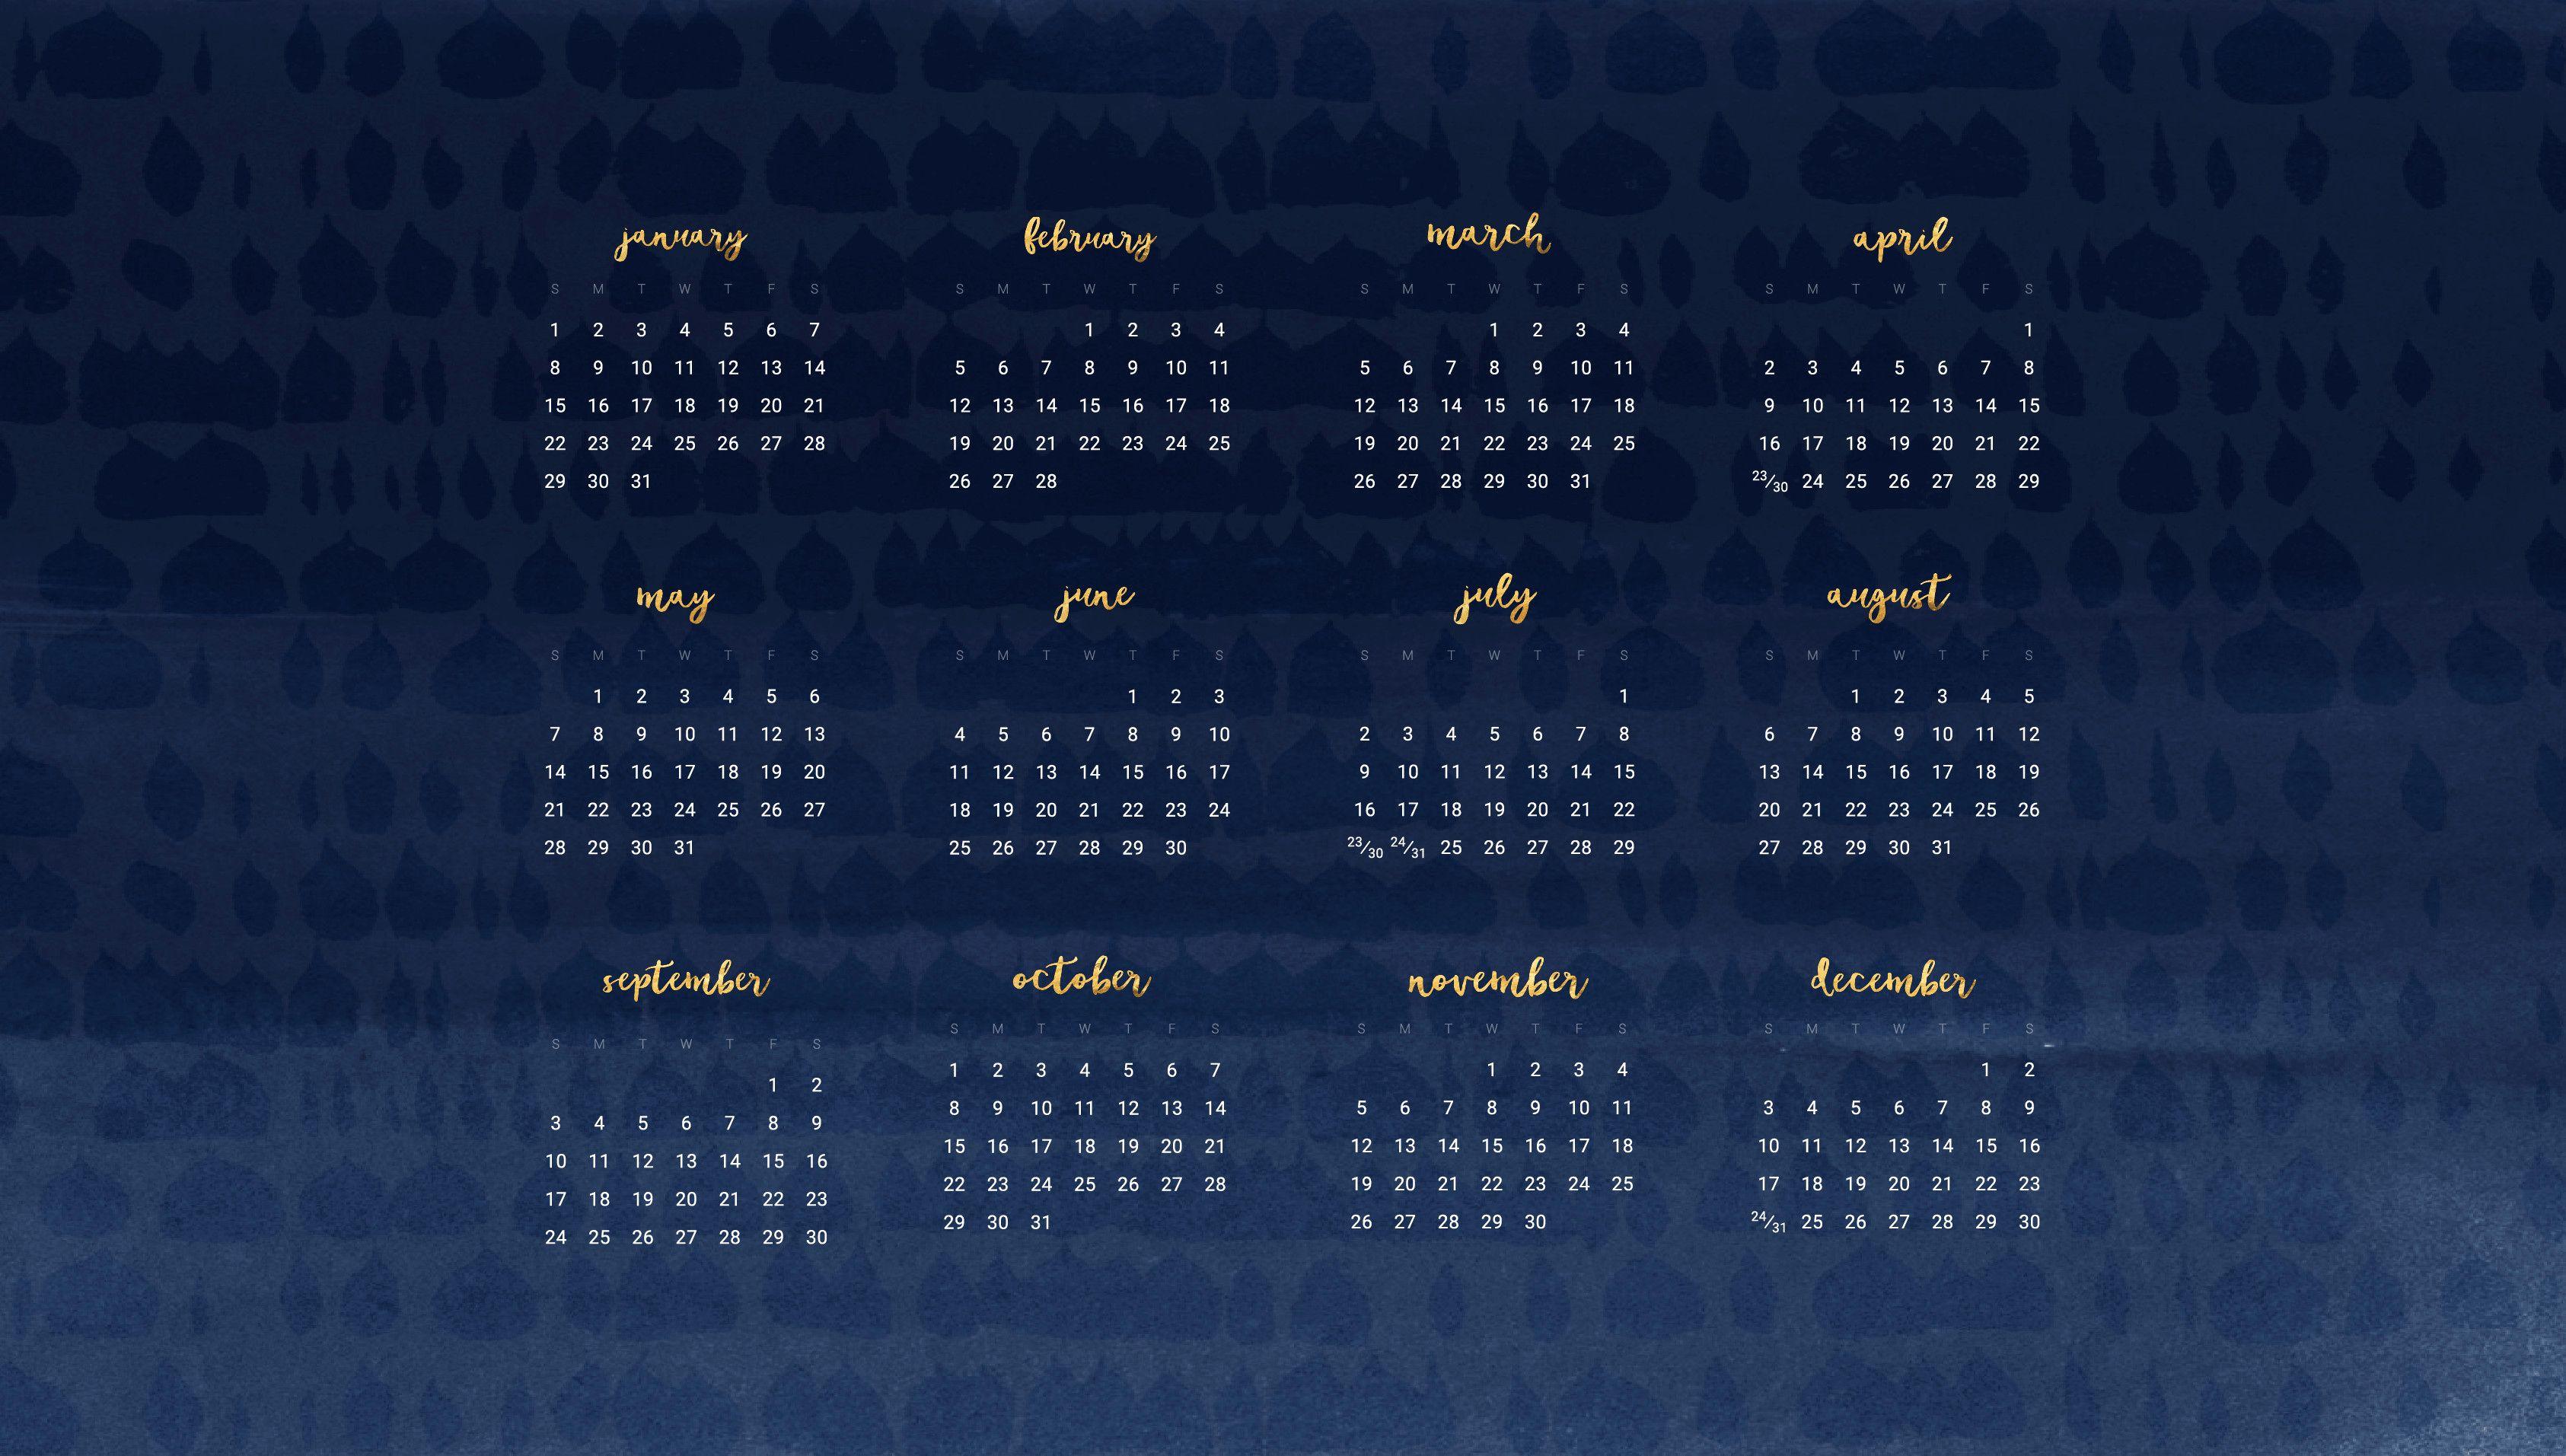 November 2018 Calendar Wallpaper with Calendar 2018